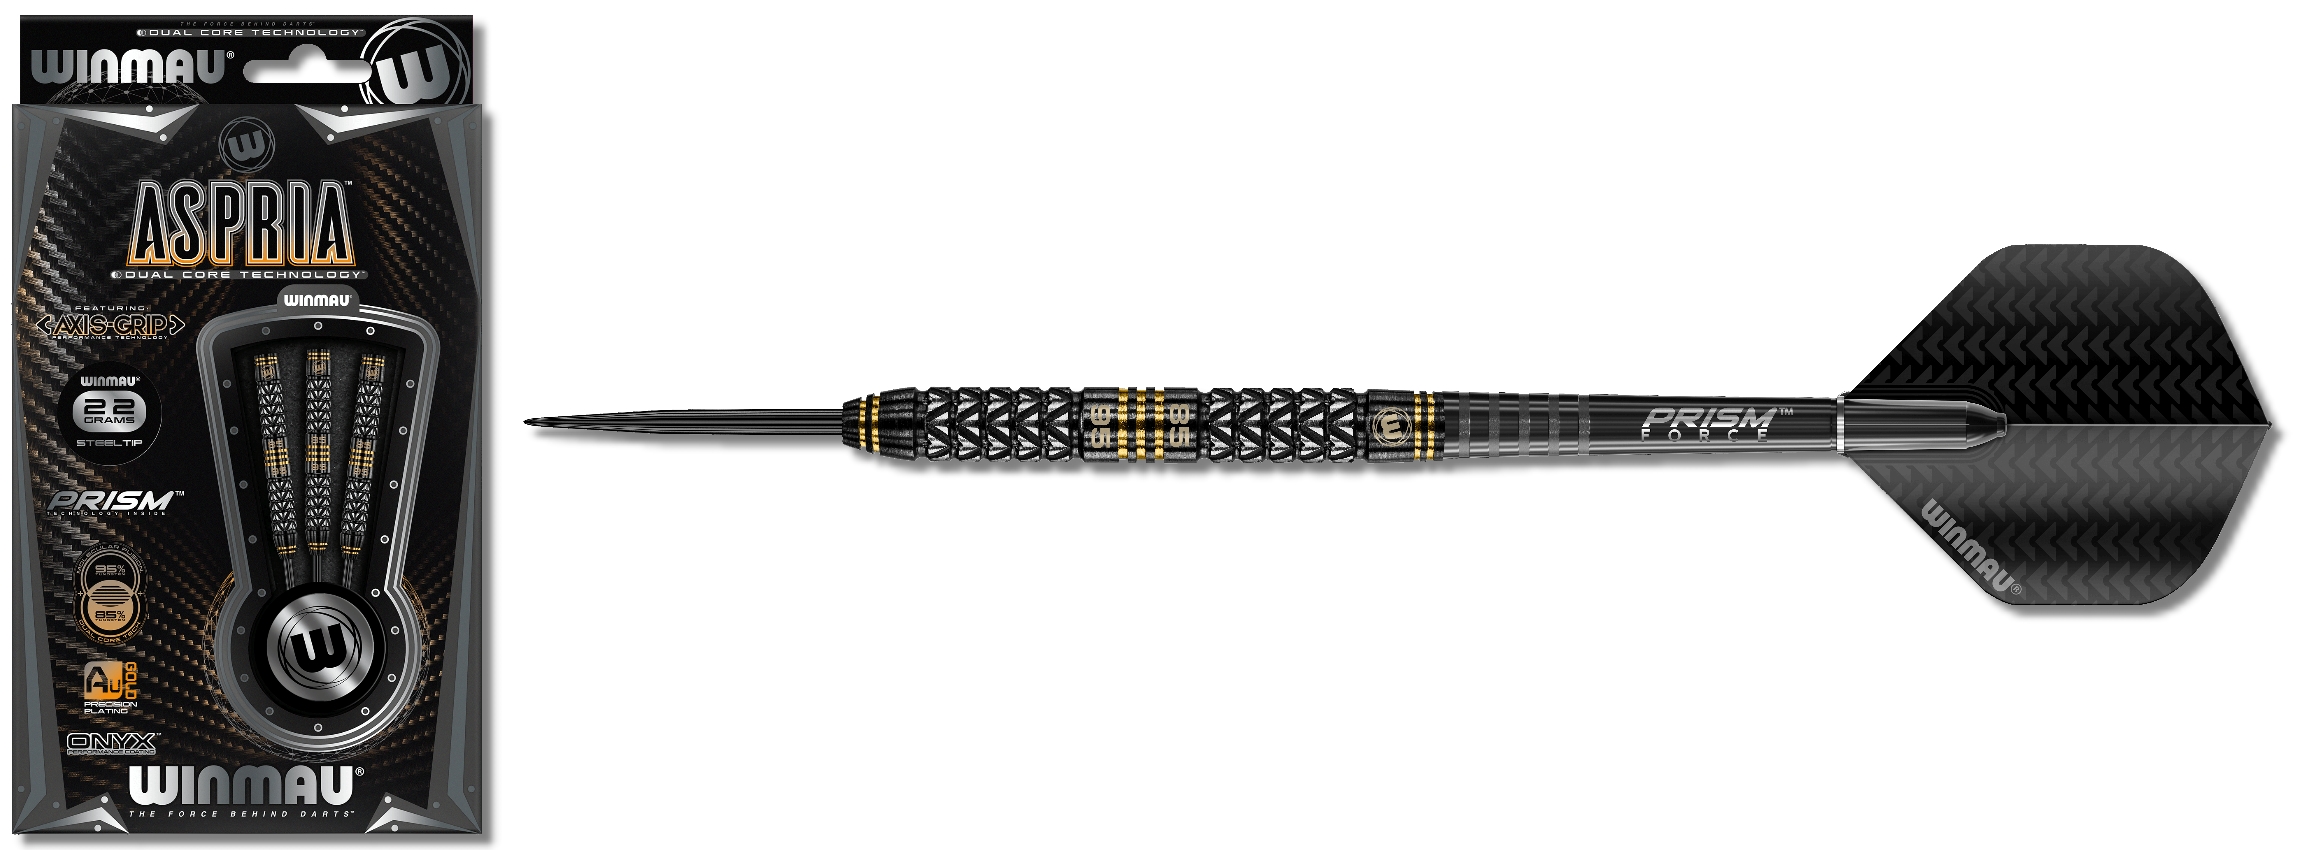 Winmau Aspria Onyx Coating steel dart 1409 22 g and 24 g